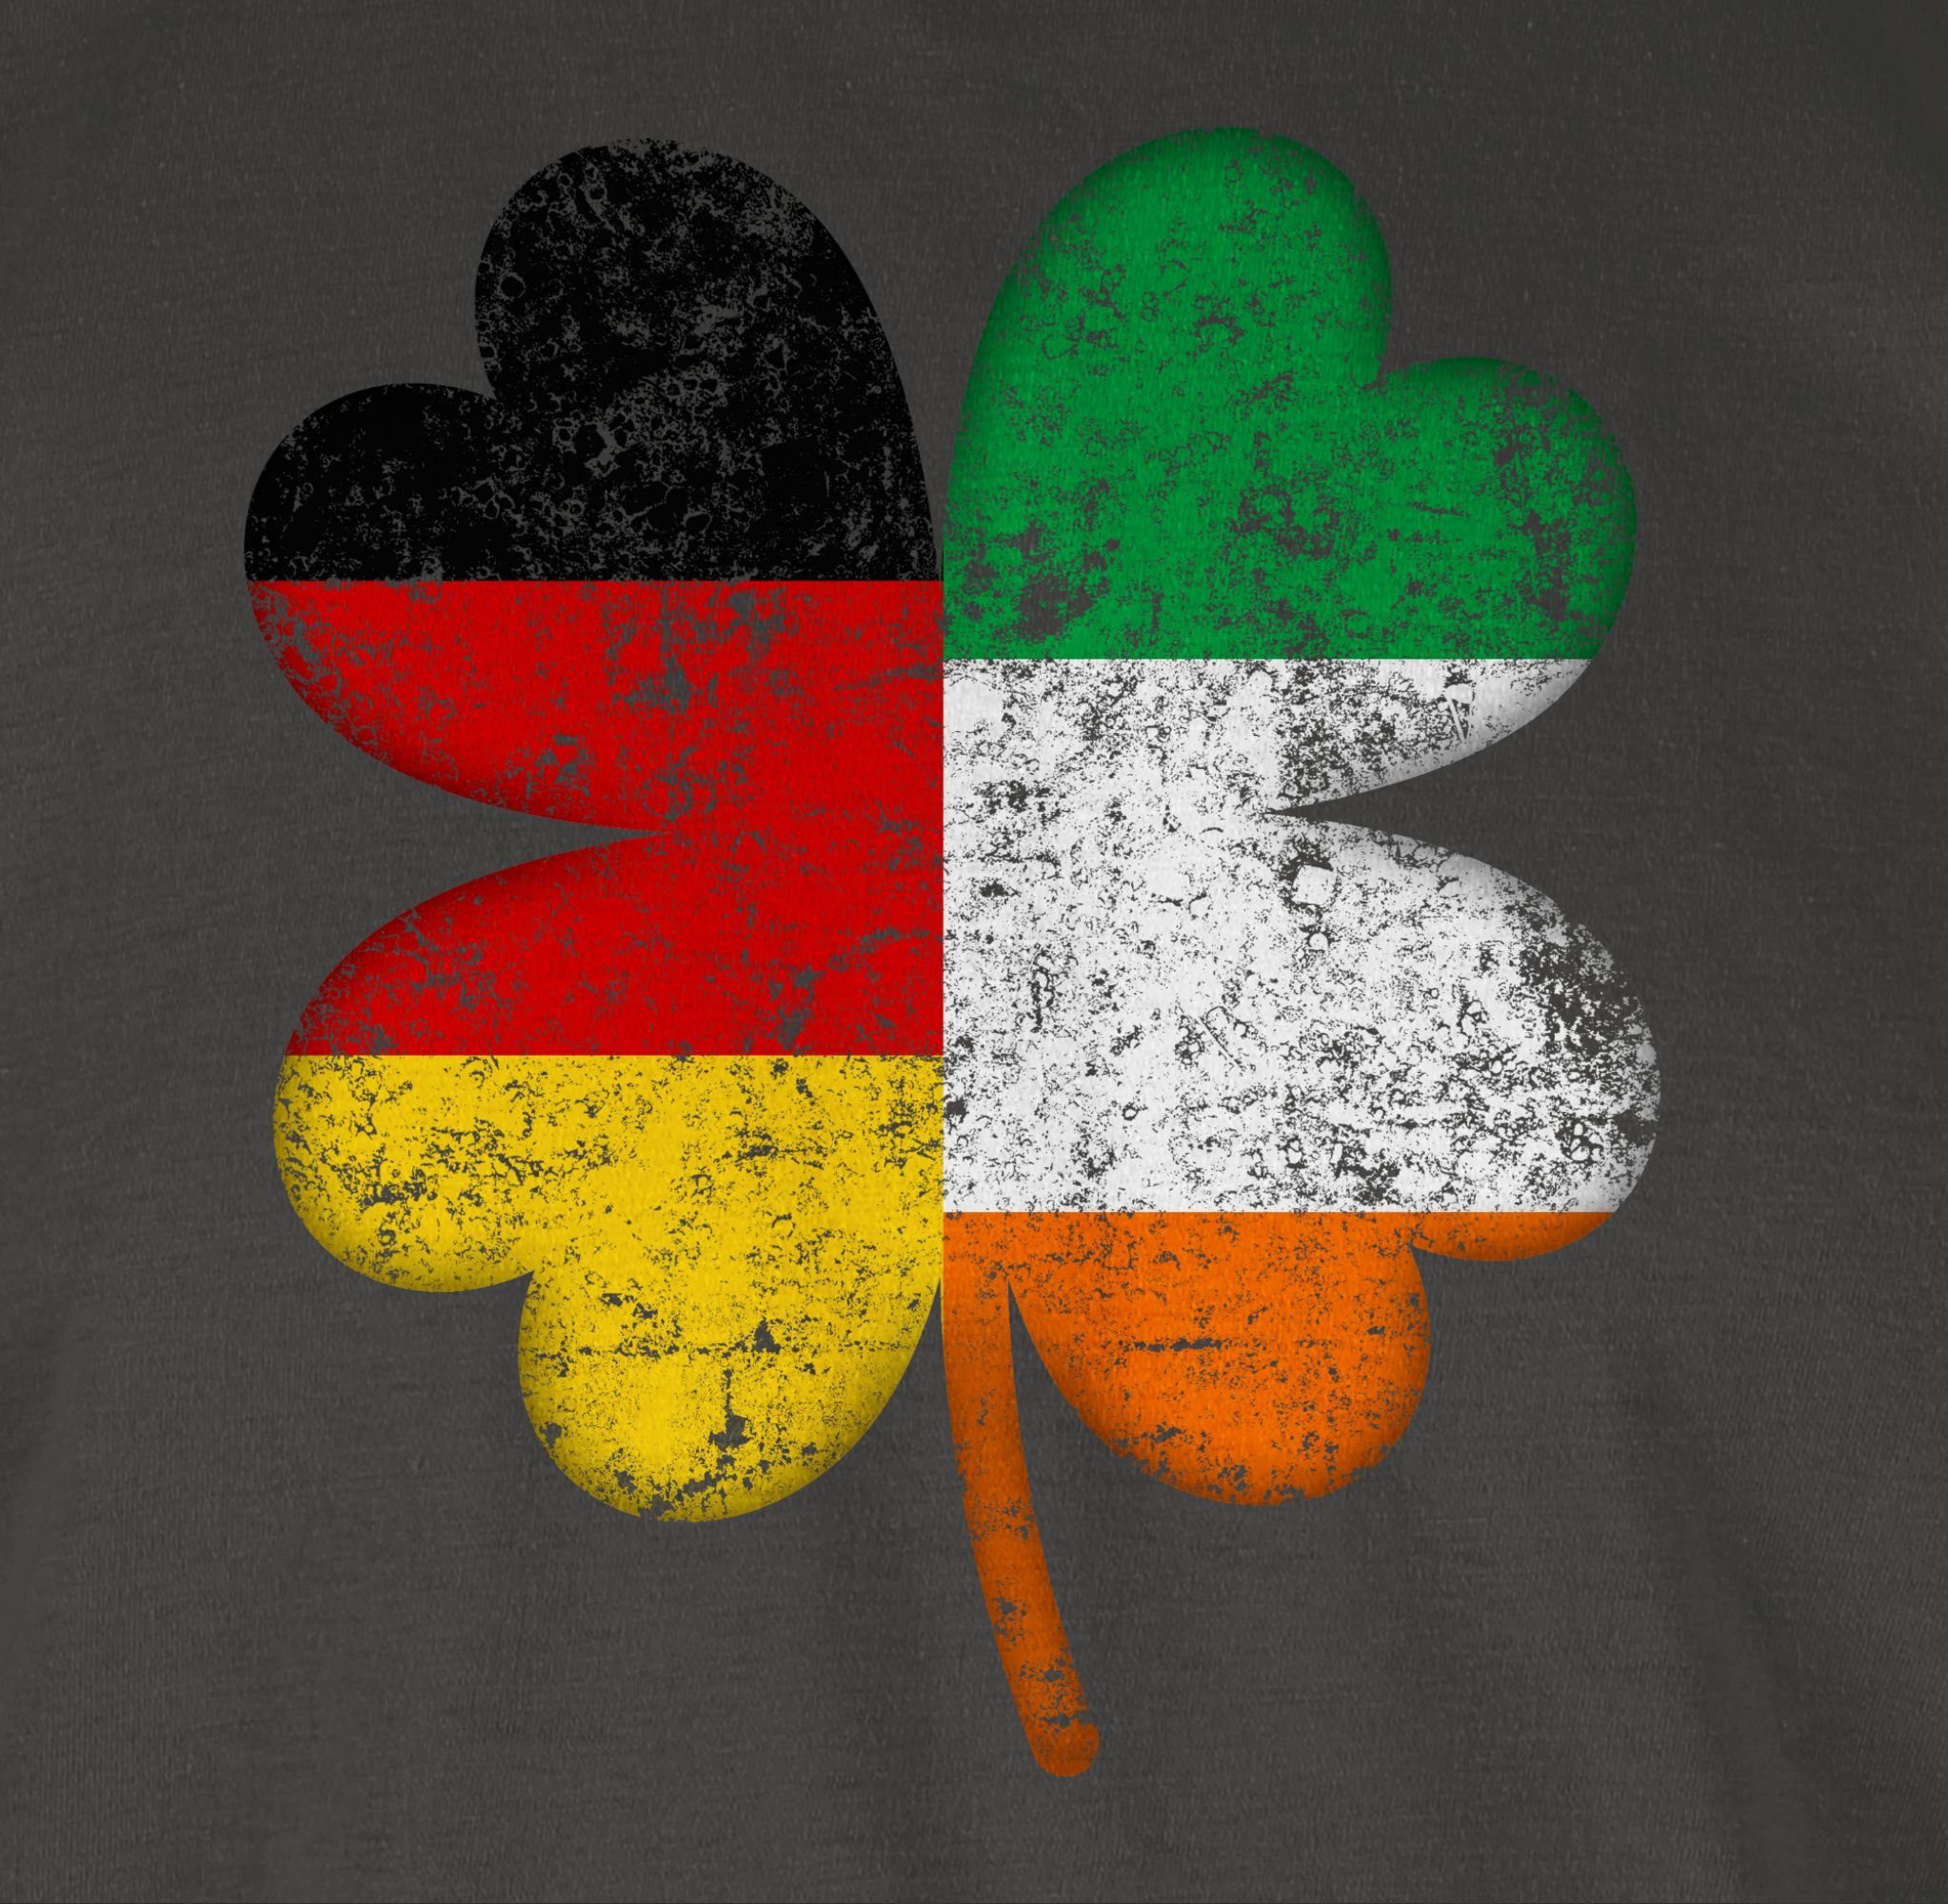 Shirtracer T-Shirt Deutschland Irland Kleeblatt Patricks 3 St. Day Dunkelgrau